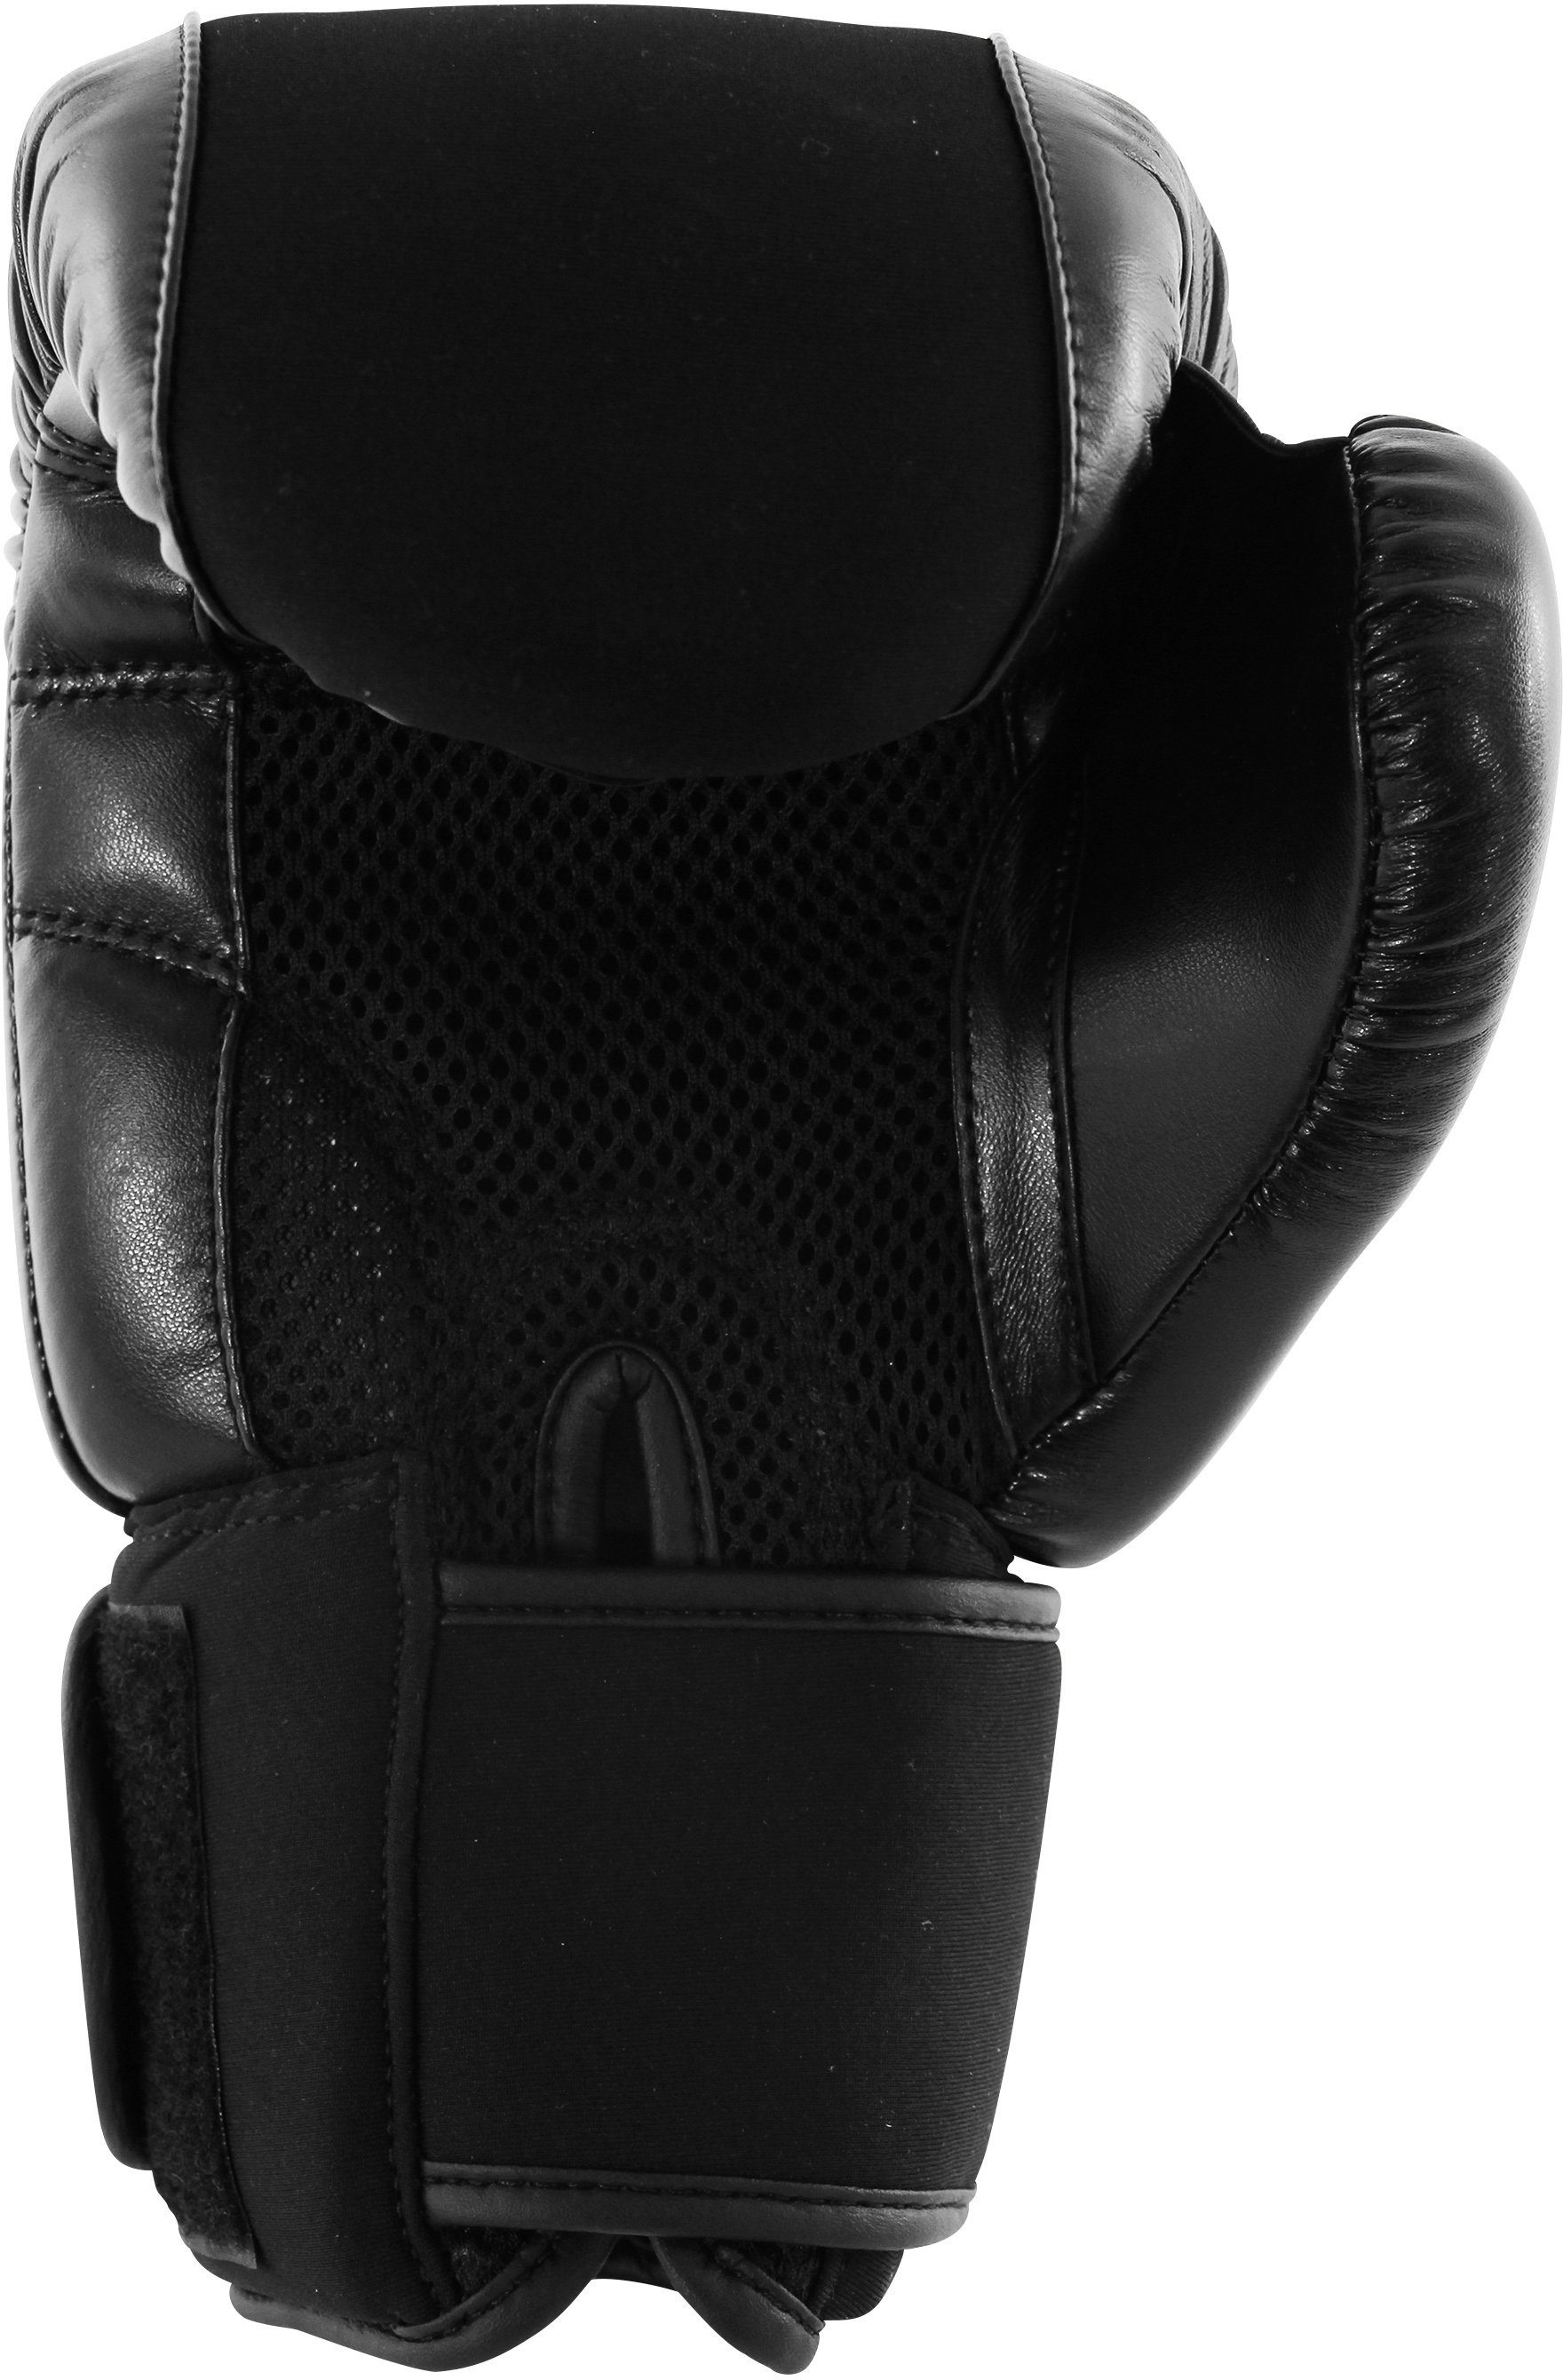 Boxhandschuhe Performance Washable adidas Gloves Boxing S–M